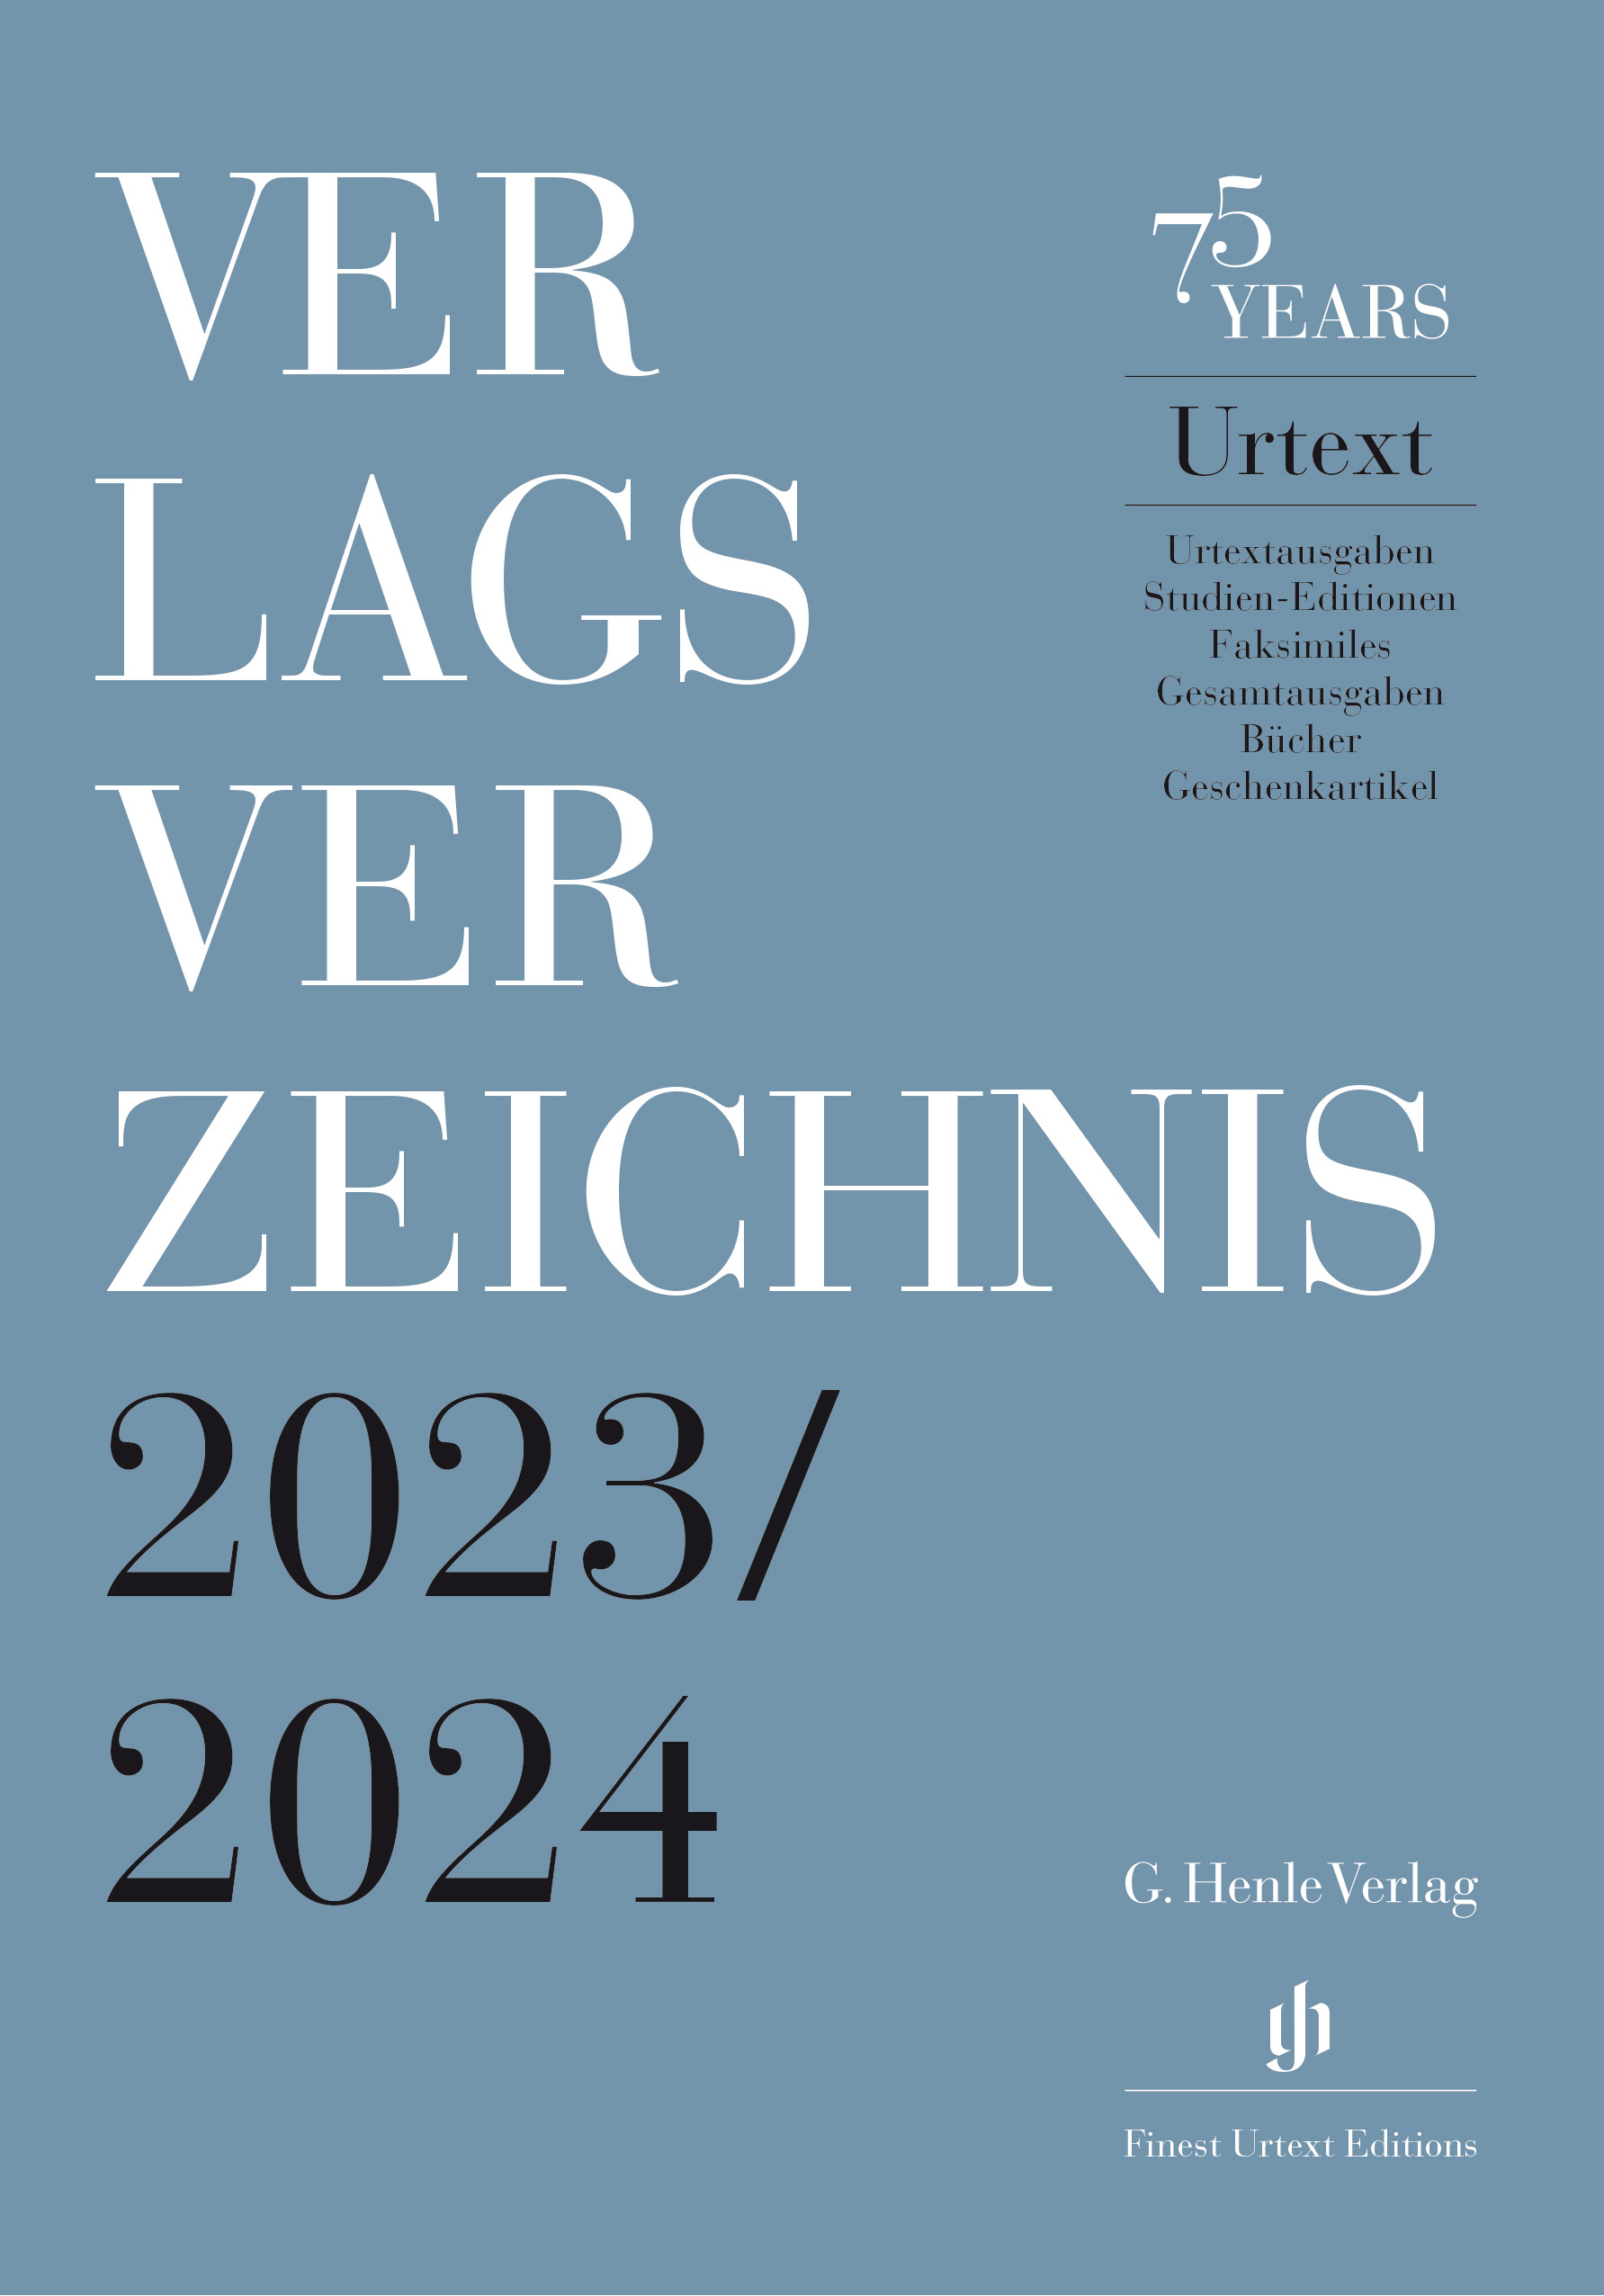 General catalogue 2023/2024, german